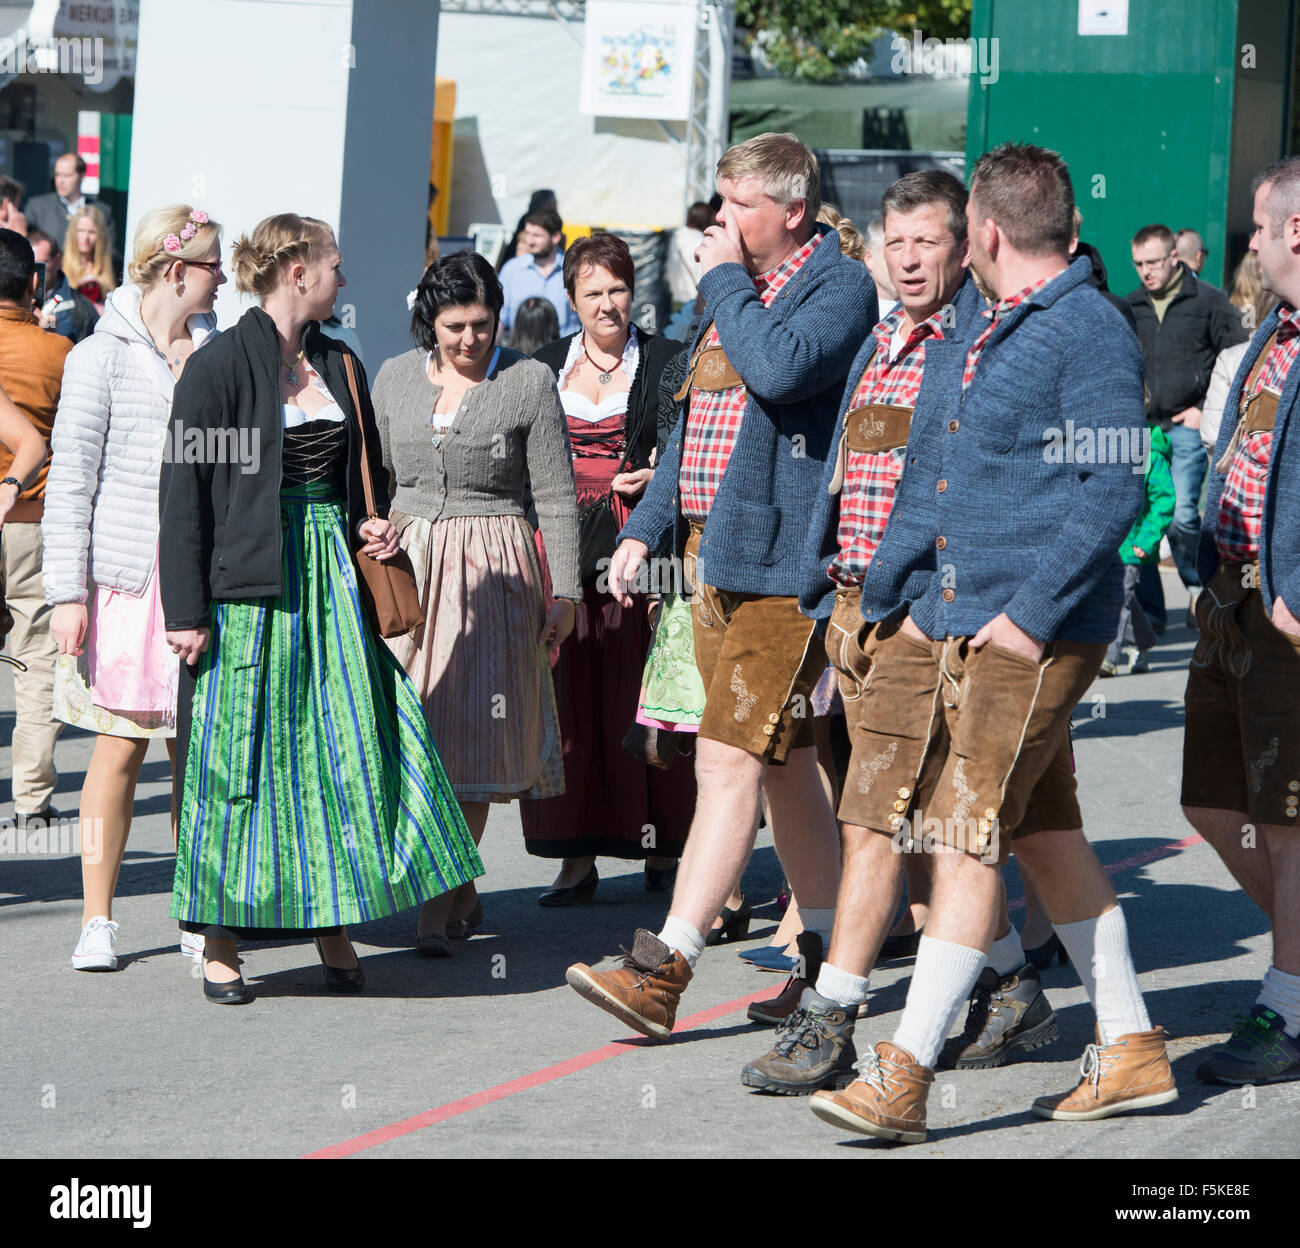 Guys in lederhosen at Oktoberfest in Munich, Germany Stock Photo - Alamy